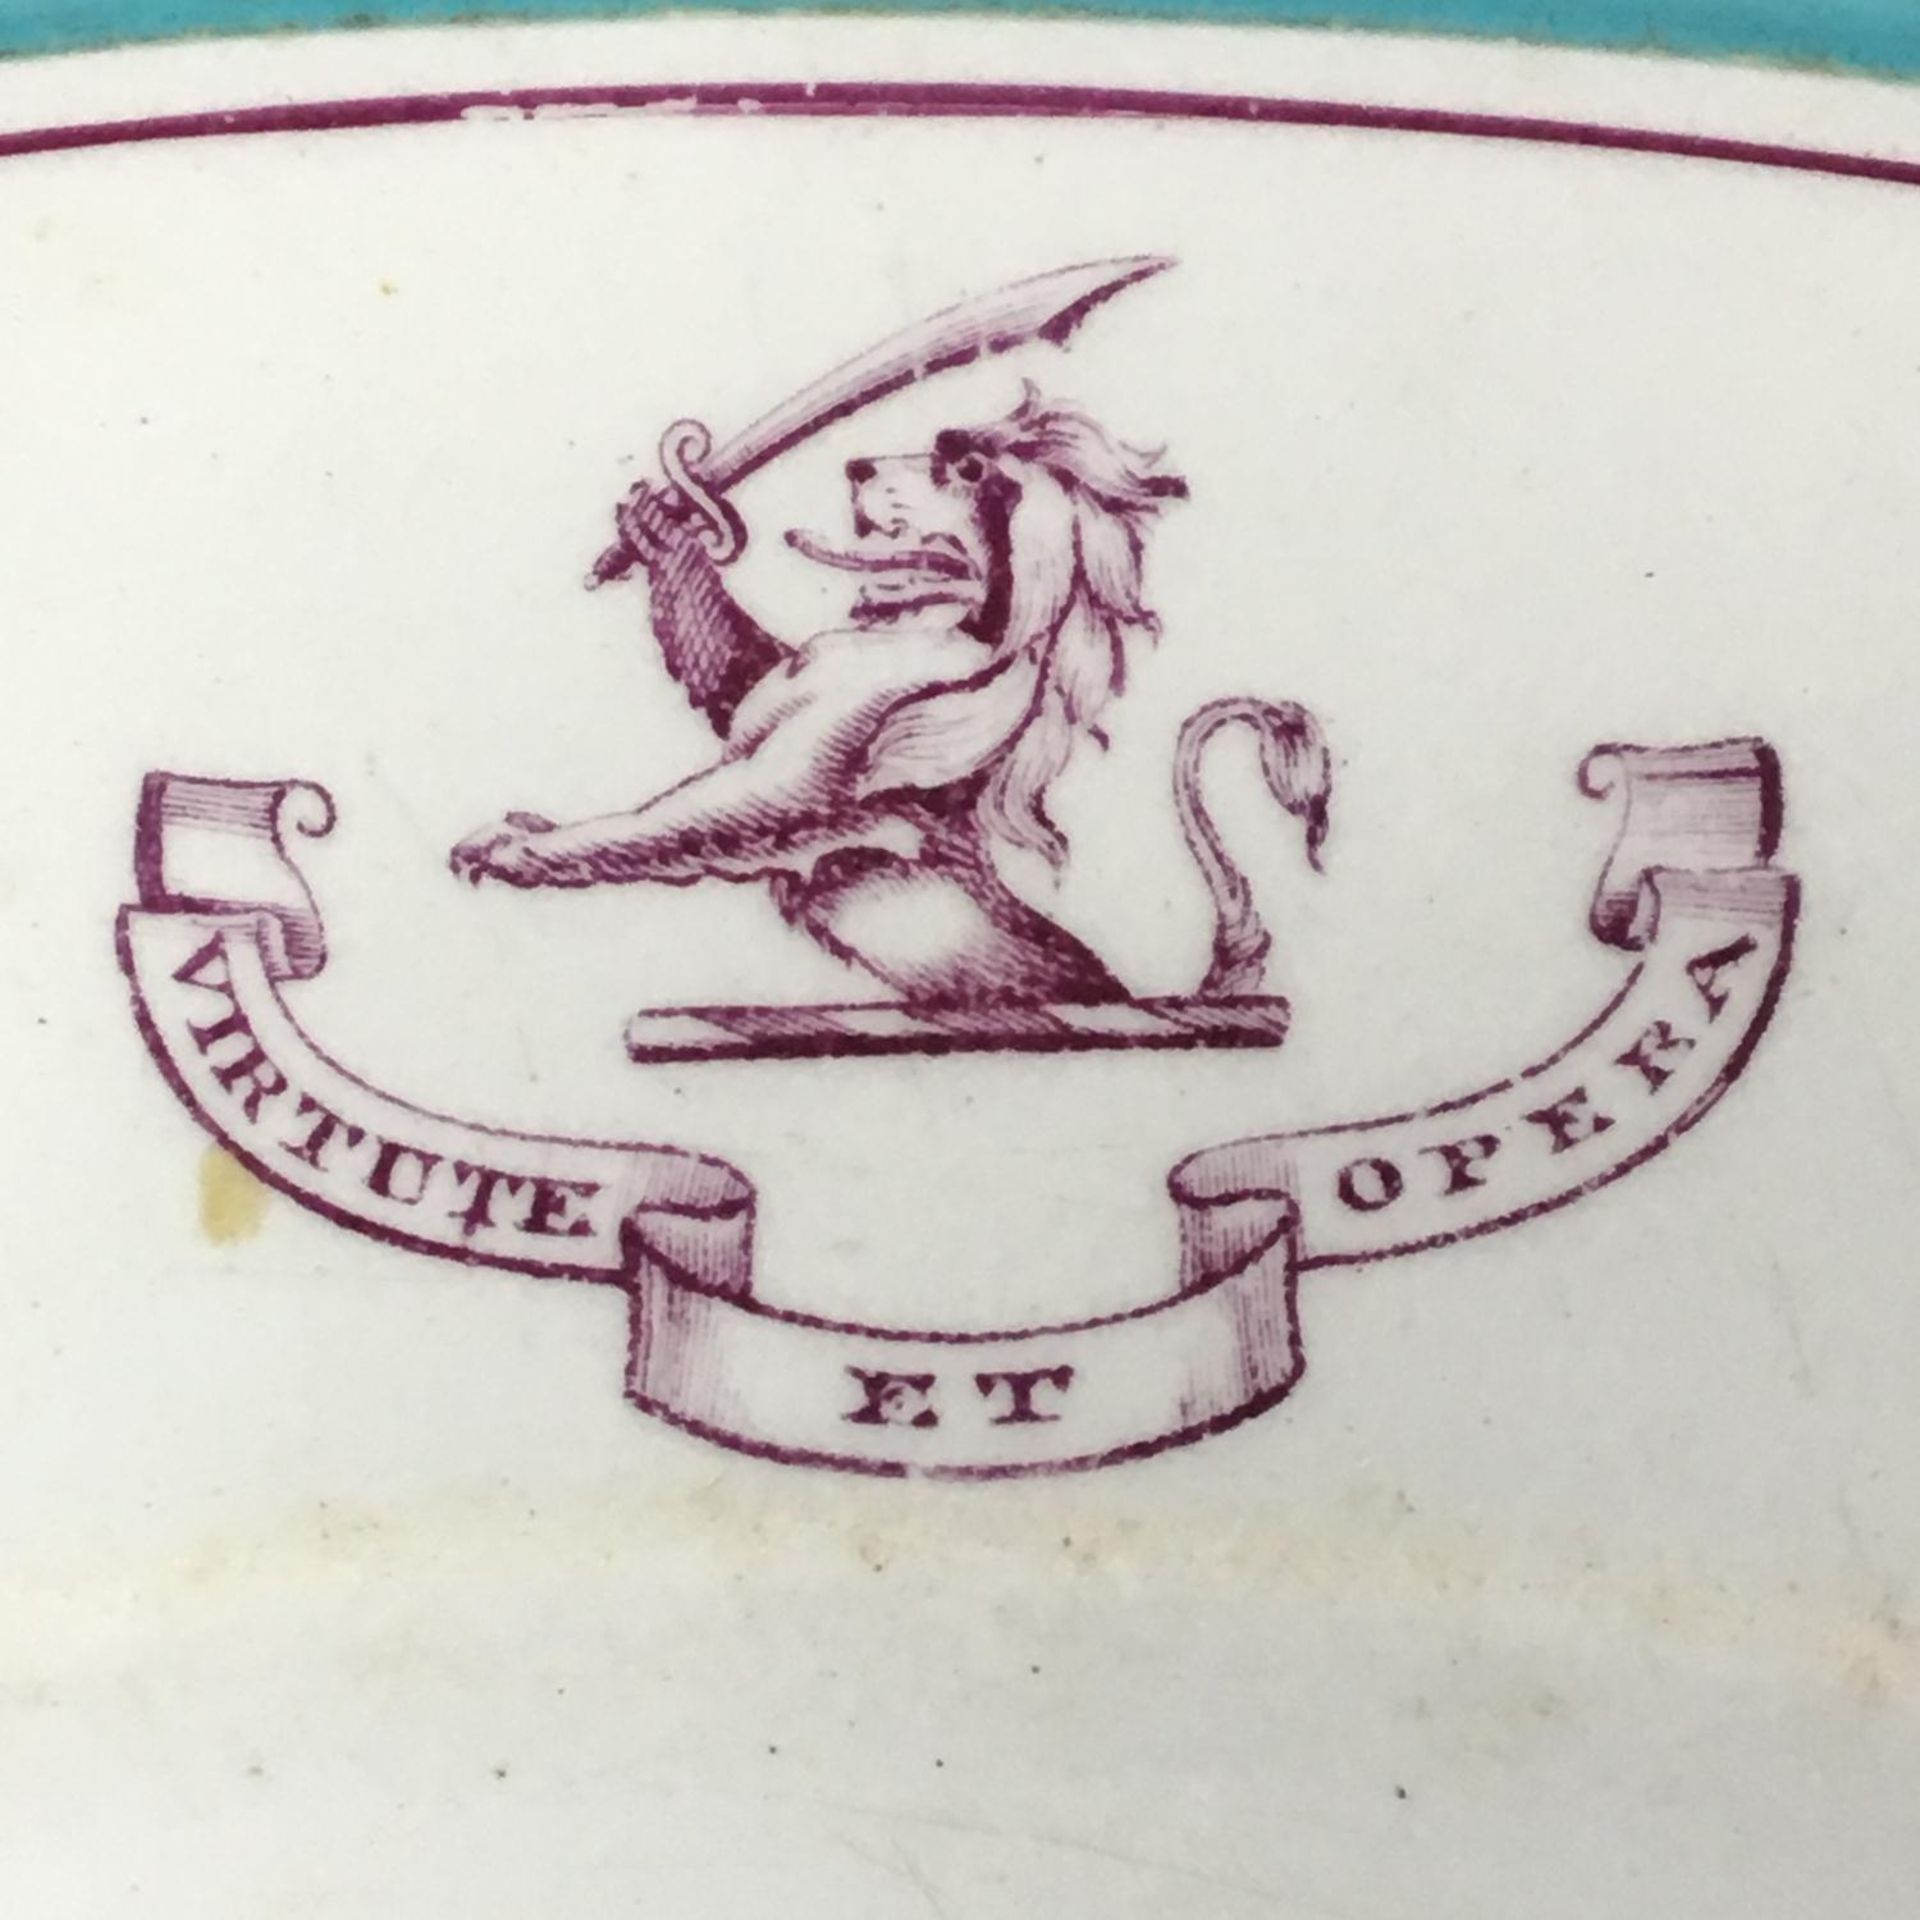 19th century heraldic plate and bowl "vertute et opera" the motto of the Duke of Fife. c1880. - Image 4 of 5